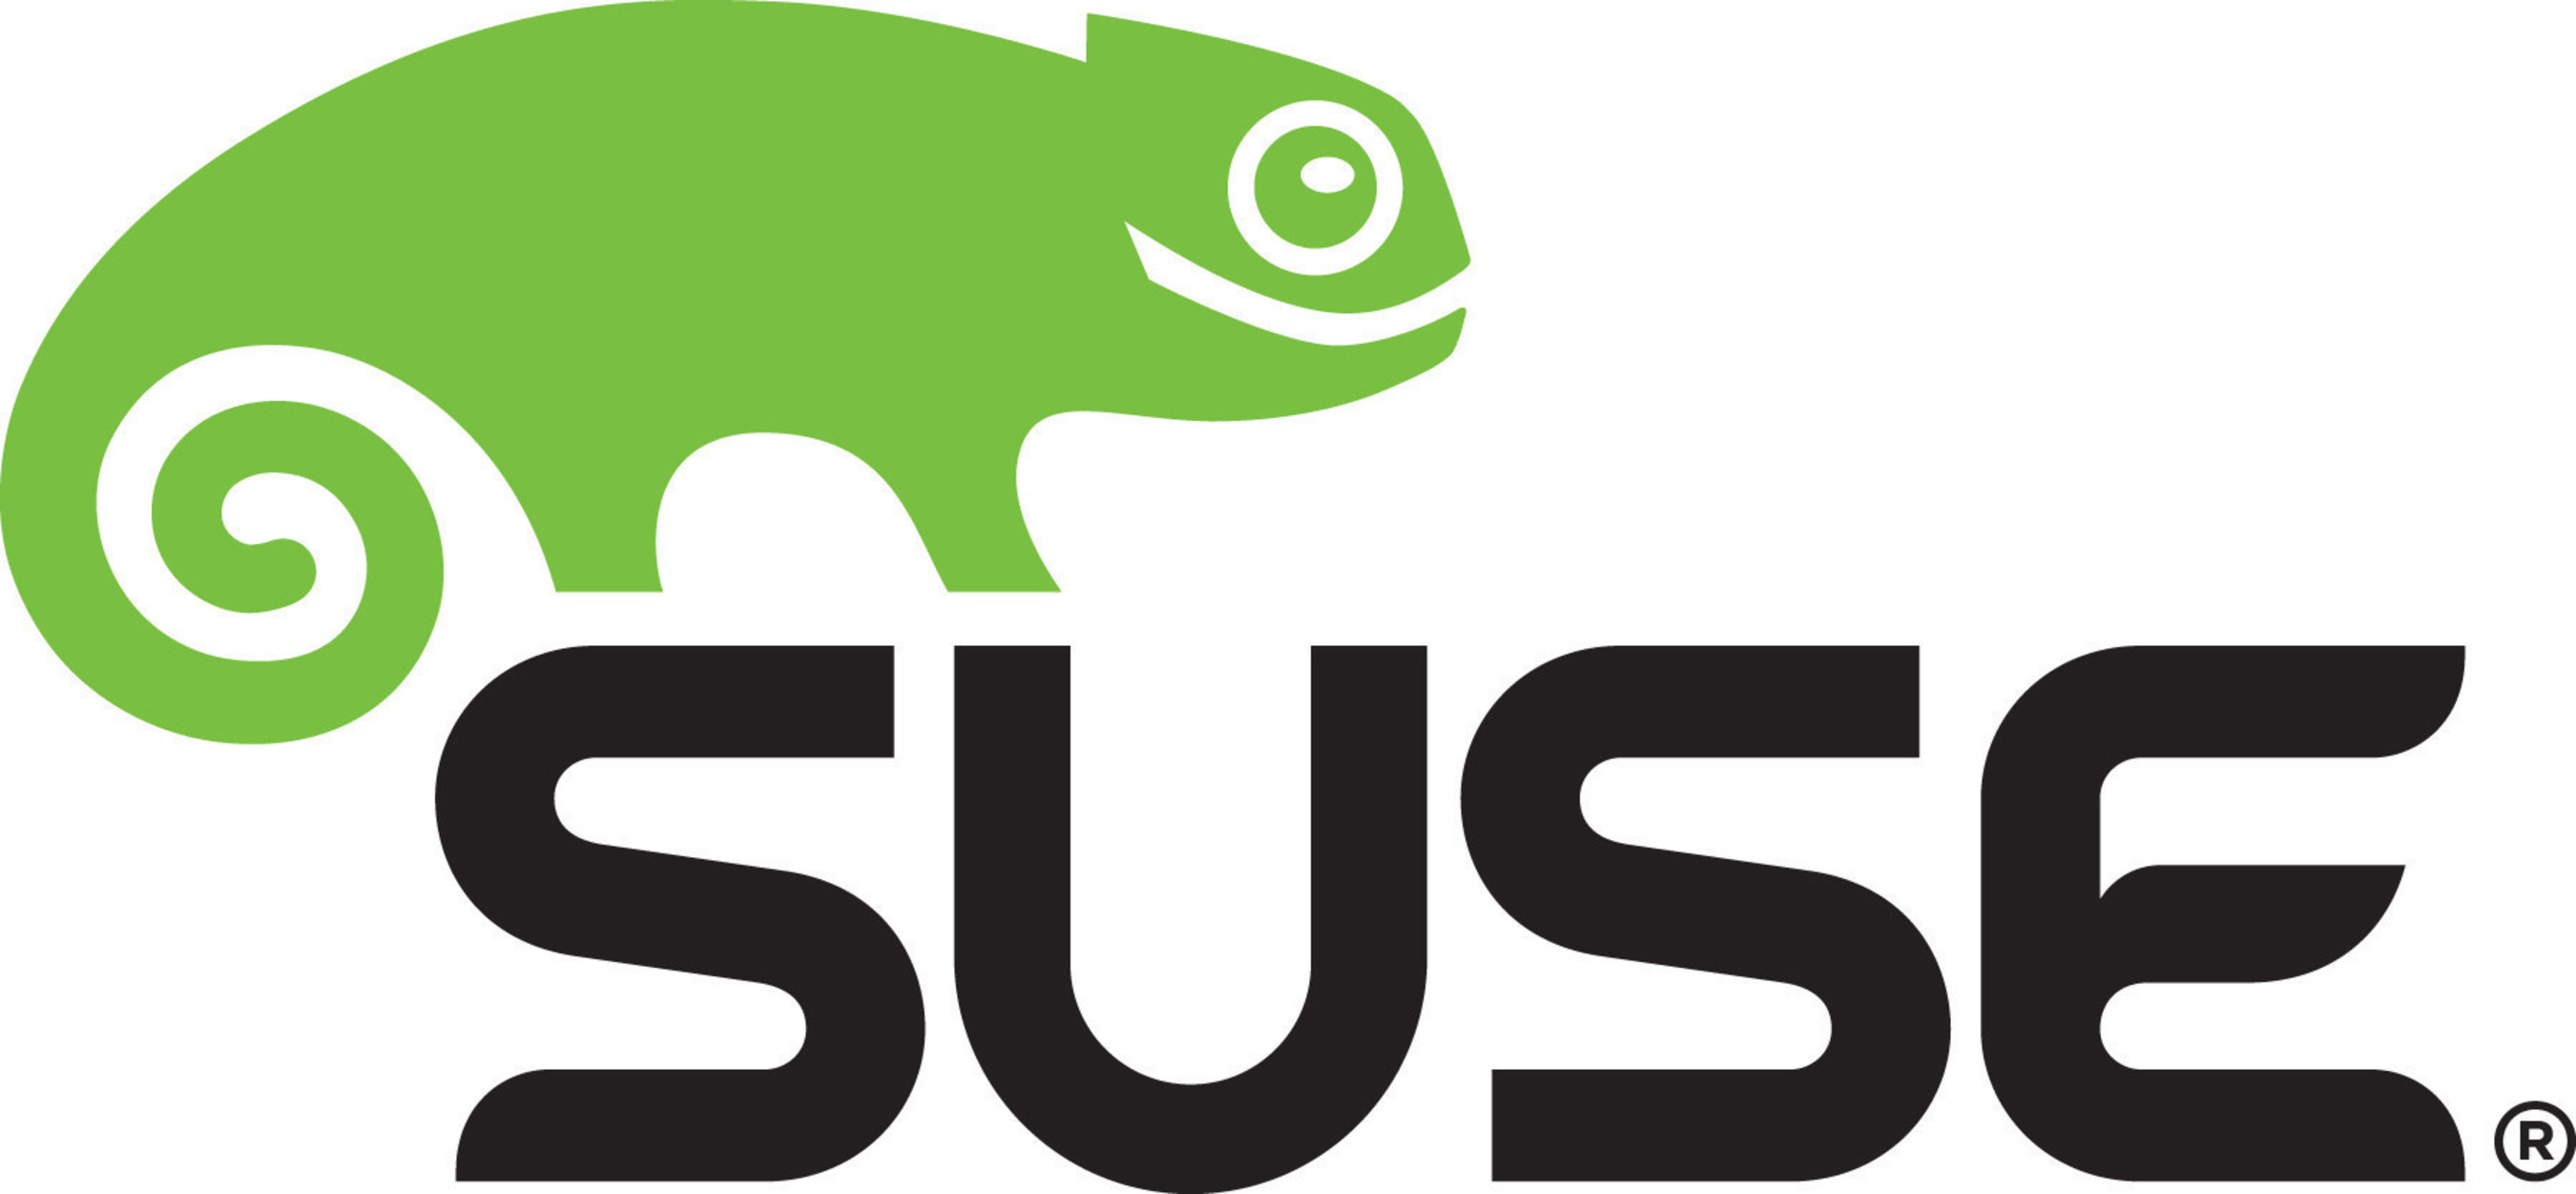 SUSE Linux logo